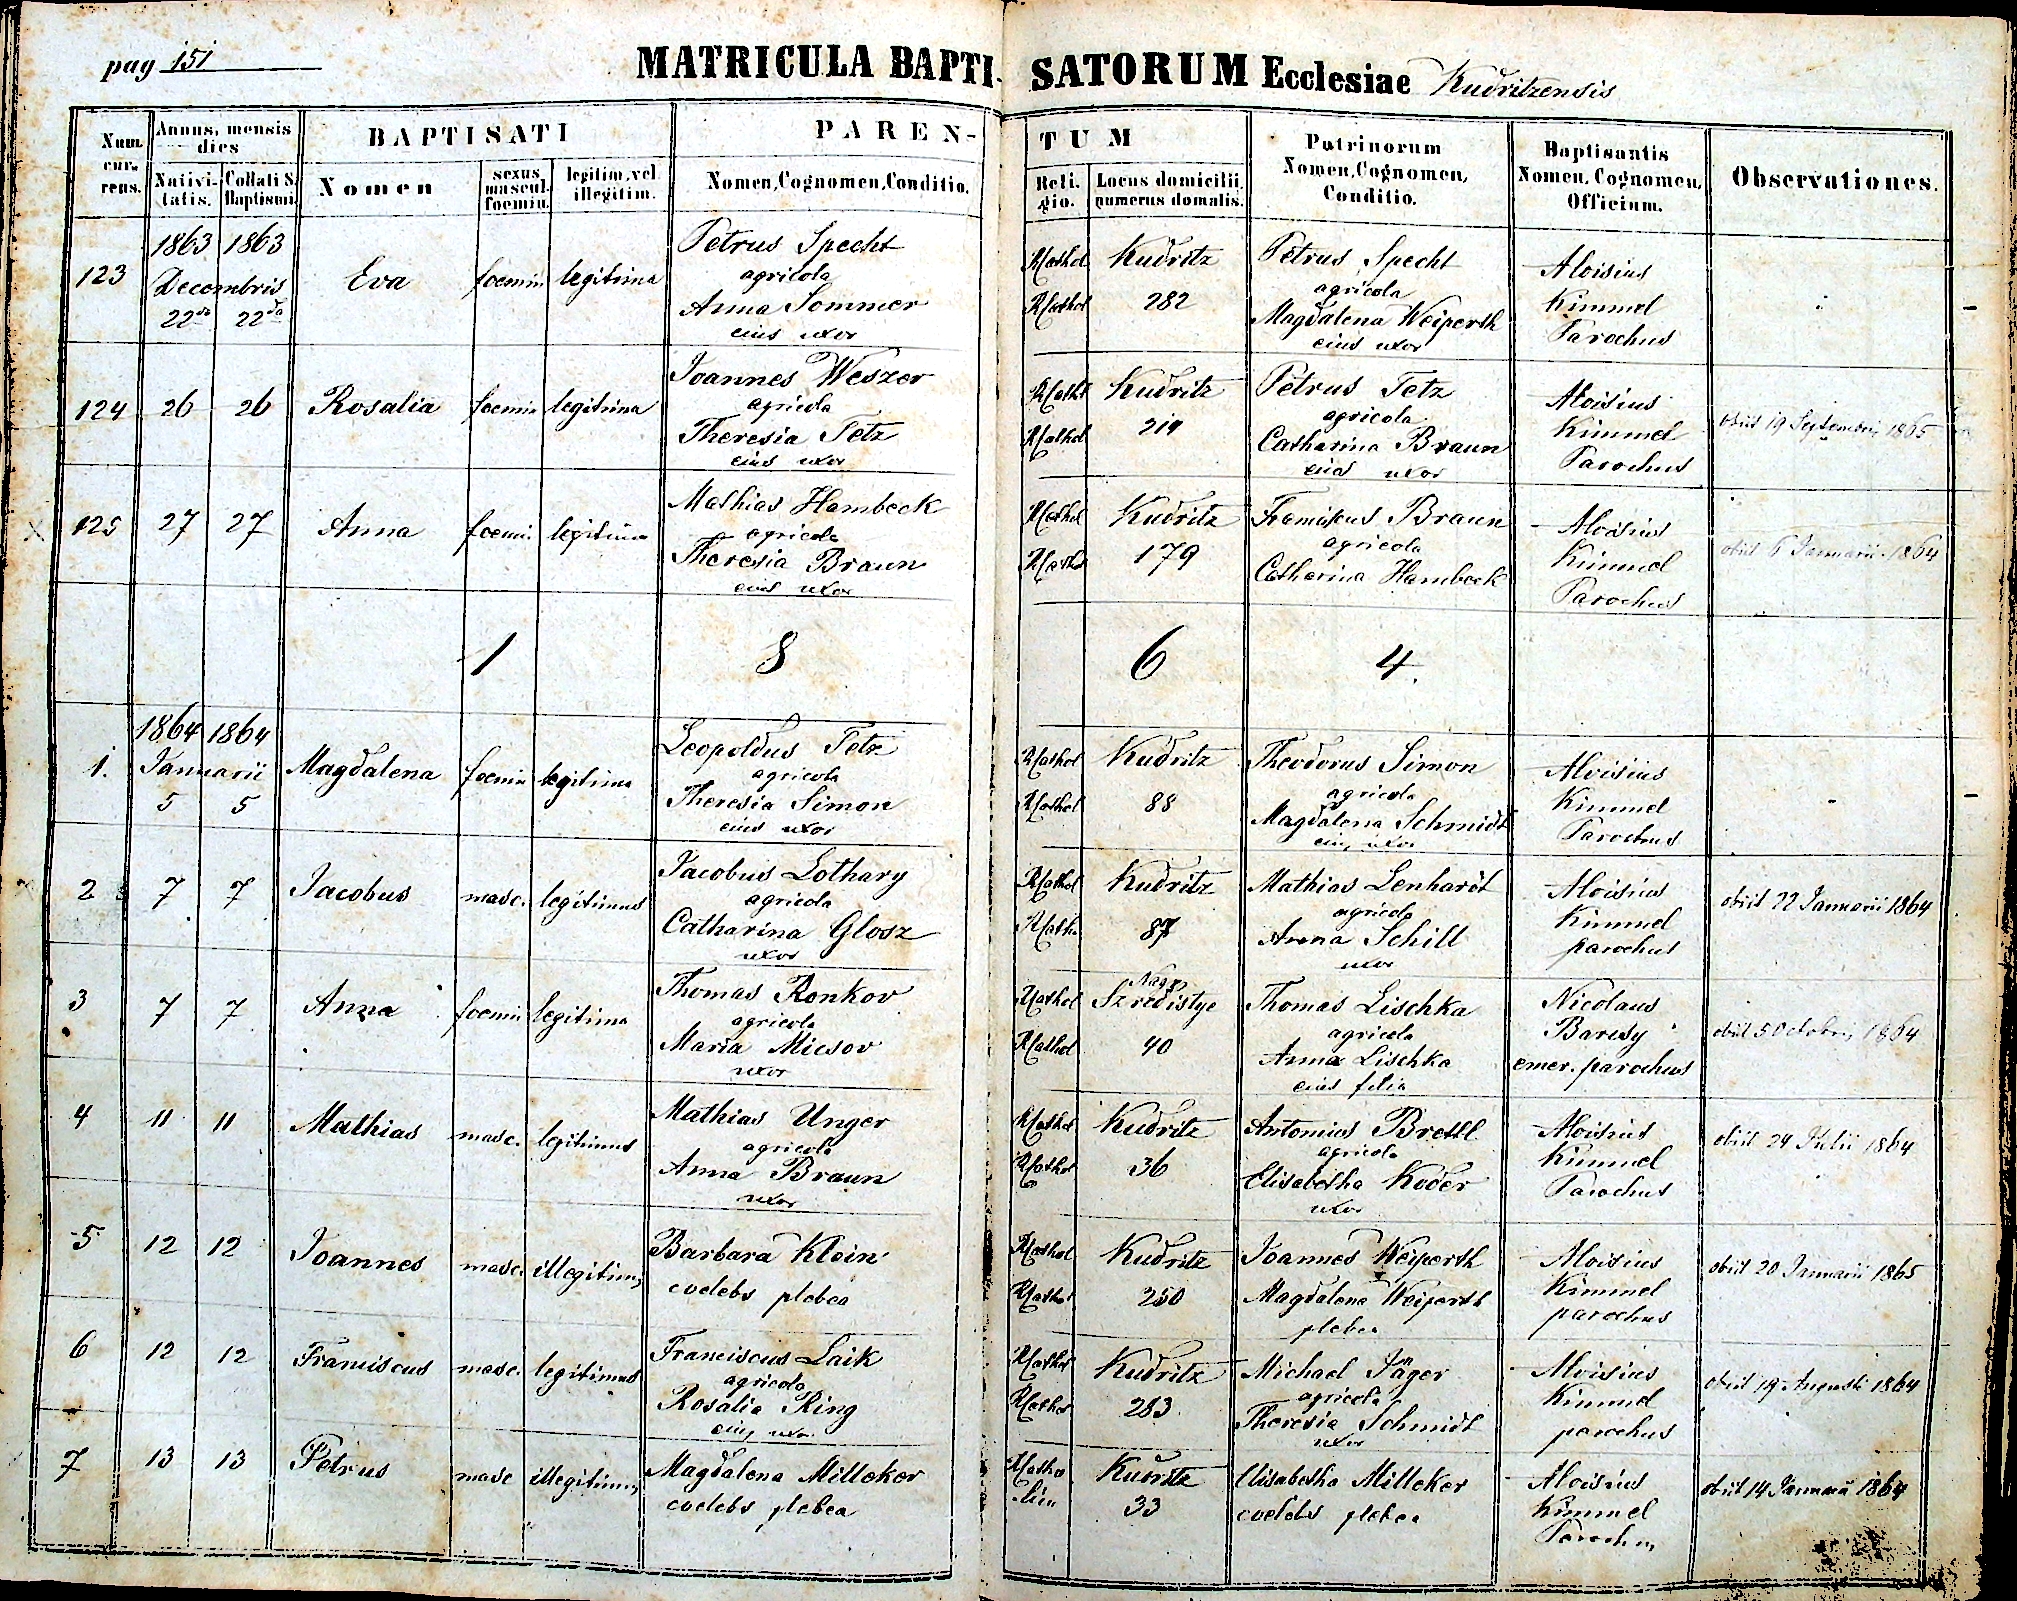 images/church_records/BIRTHS/1852-1870B/151